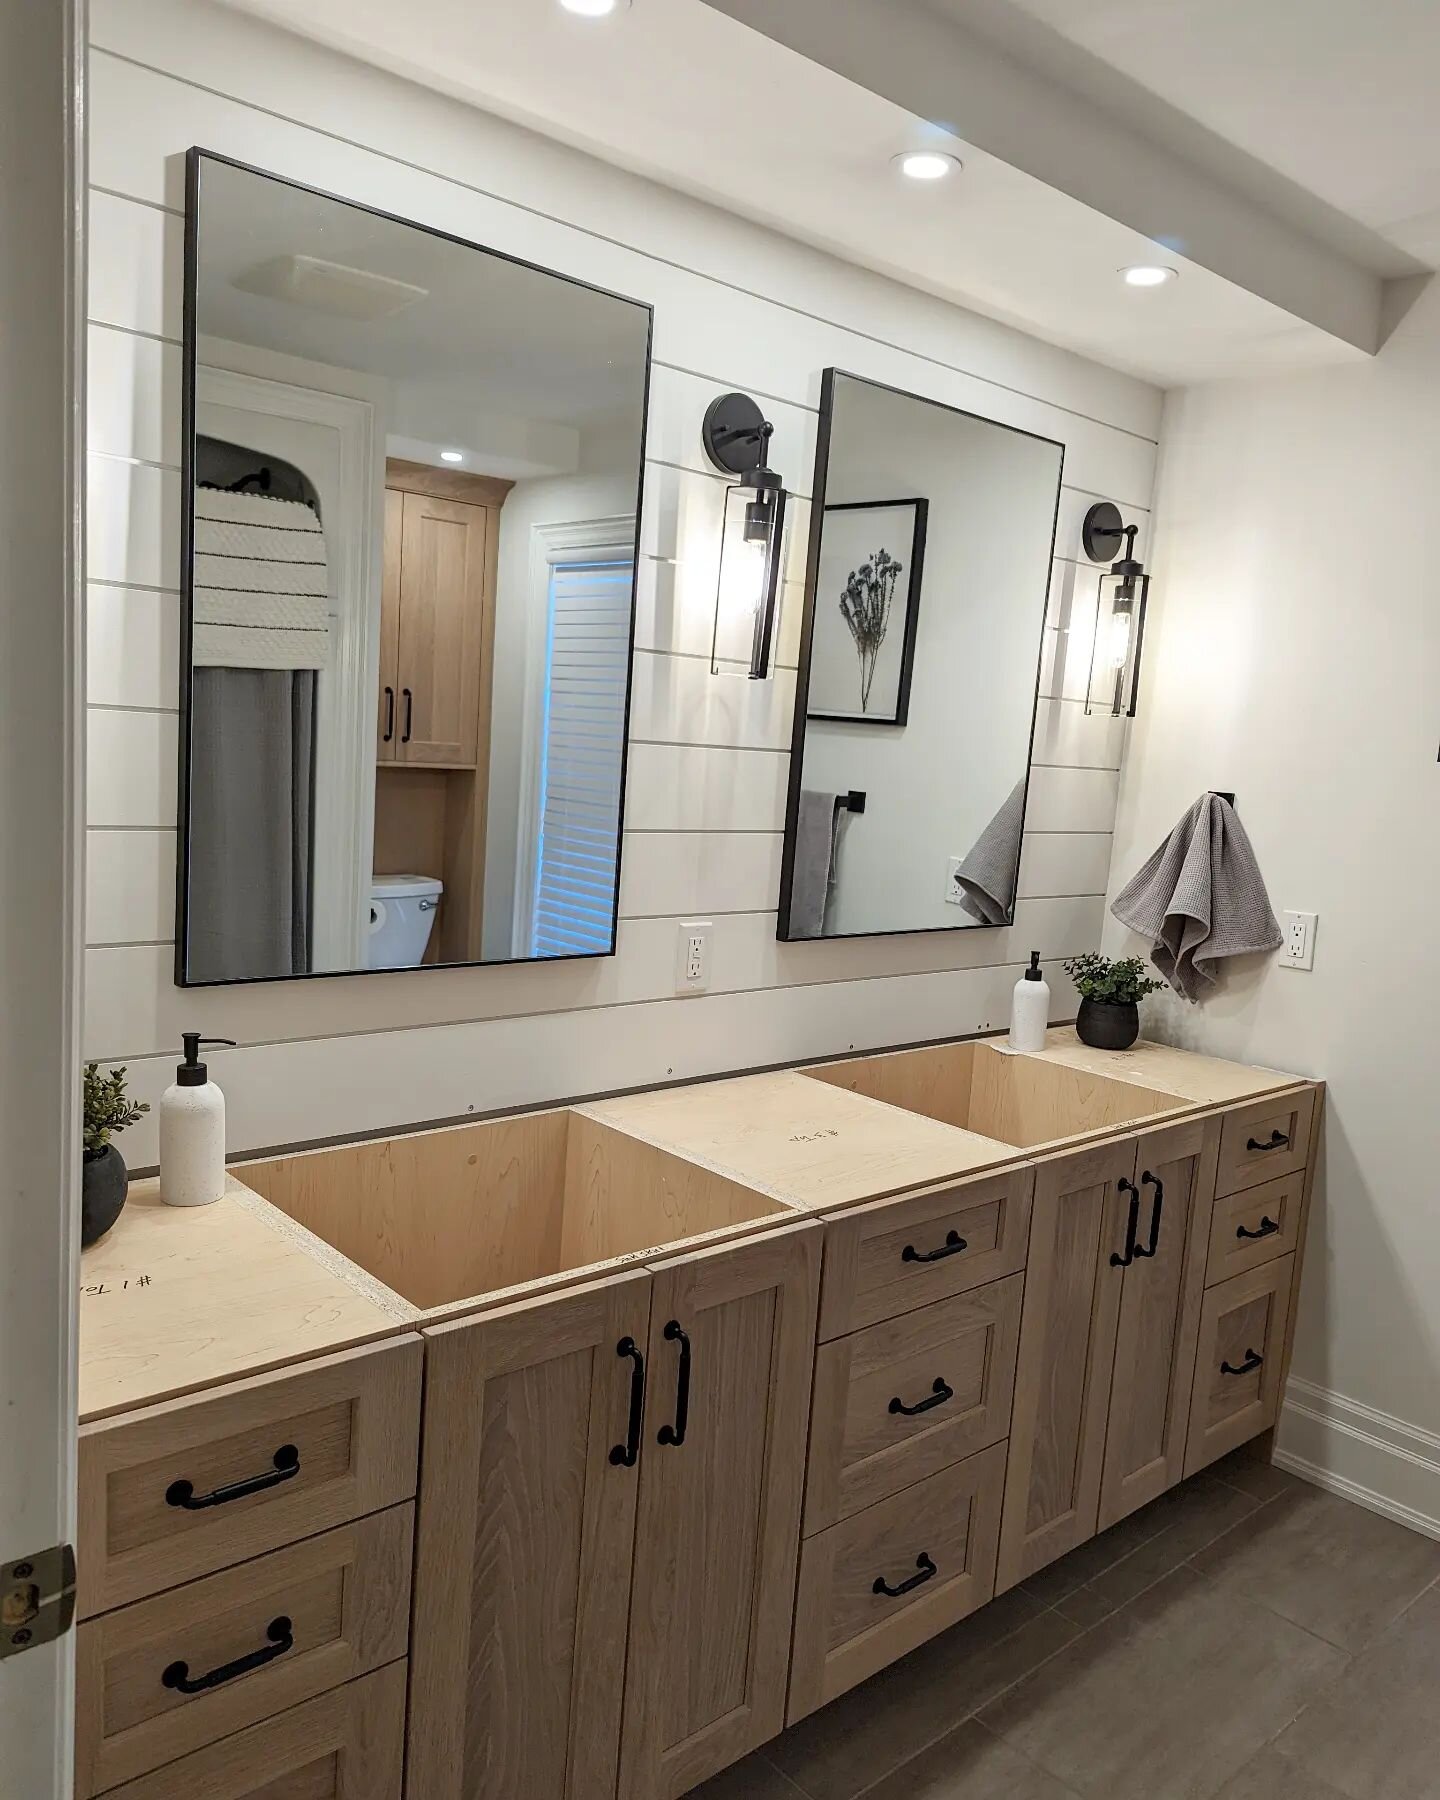 Clean, Simple, and yet elegant. 

#ingrainconcepts #vanity #bathroom #farmhouse #clean #simple #elegant #bathroomsofinstagram #cabinetry #woodworking #whiteoak #finewoodworking #custom #bespoke #shiplapwalls @rubiomonocoatcanada @rubiomonocoat #rubio